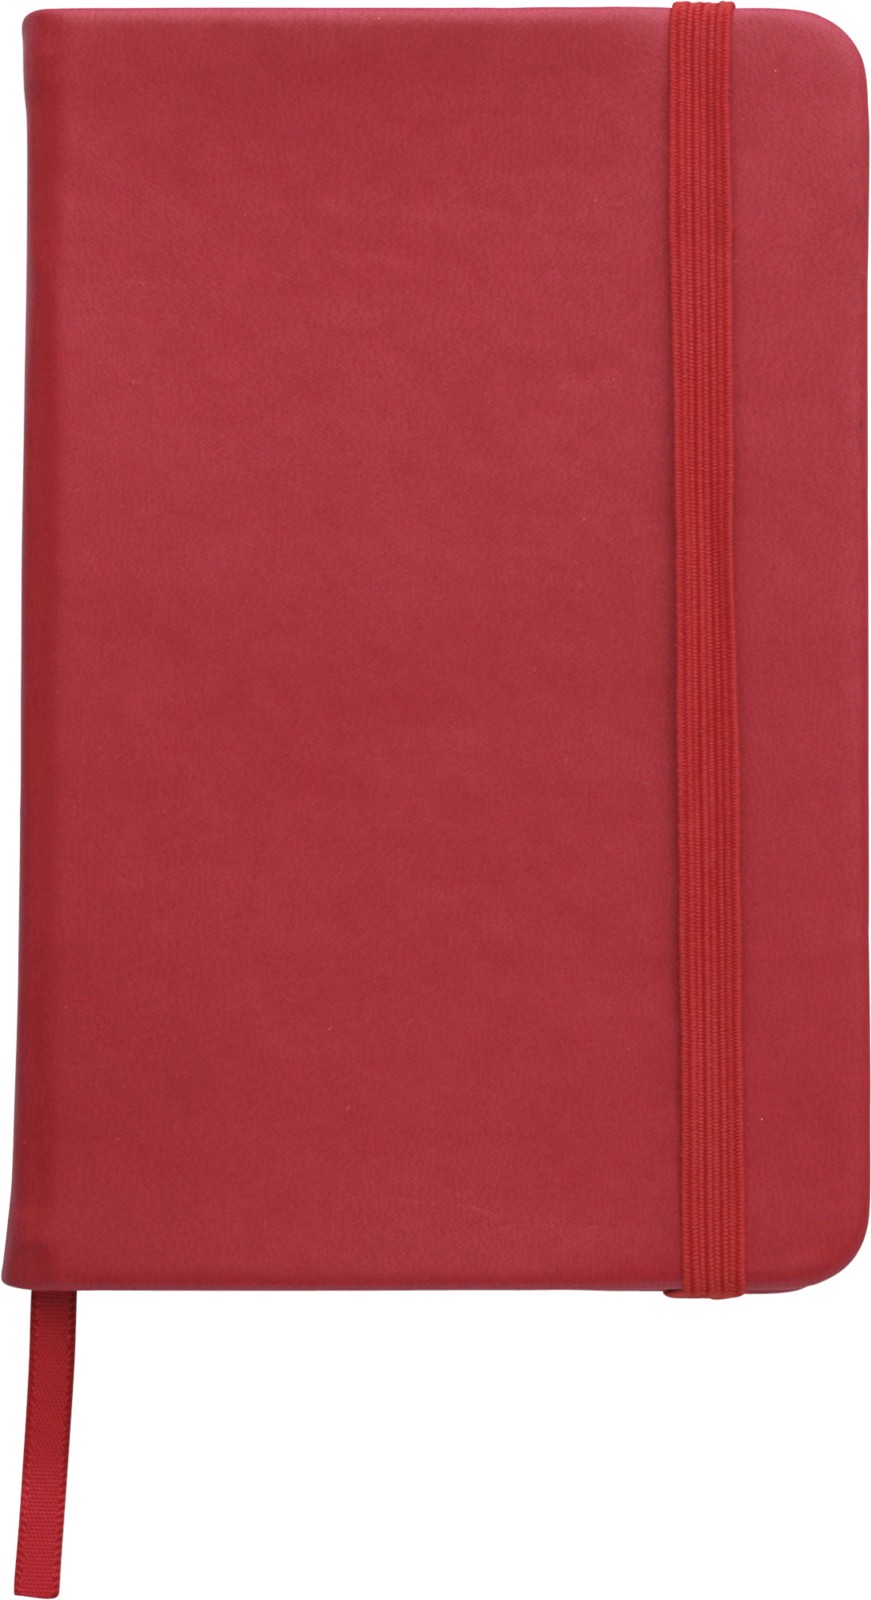 notebook a5 in offerta